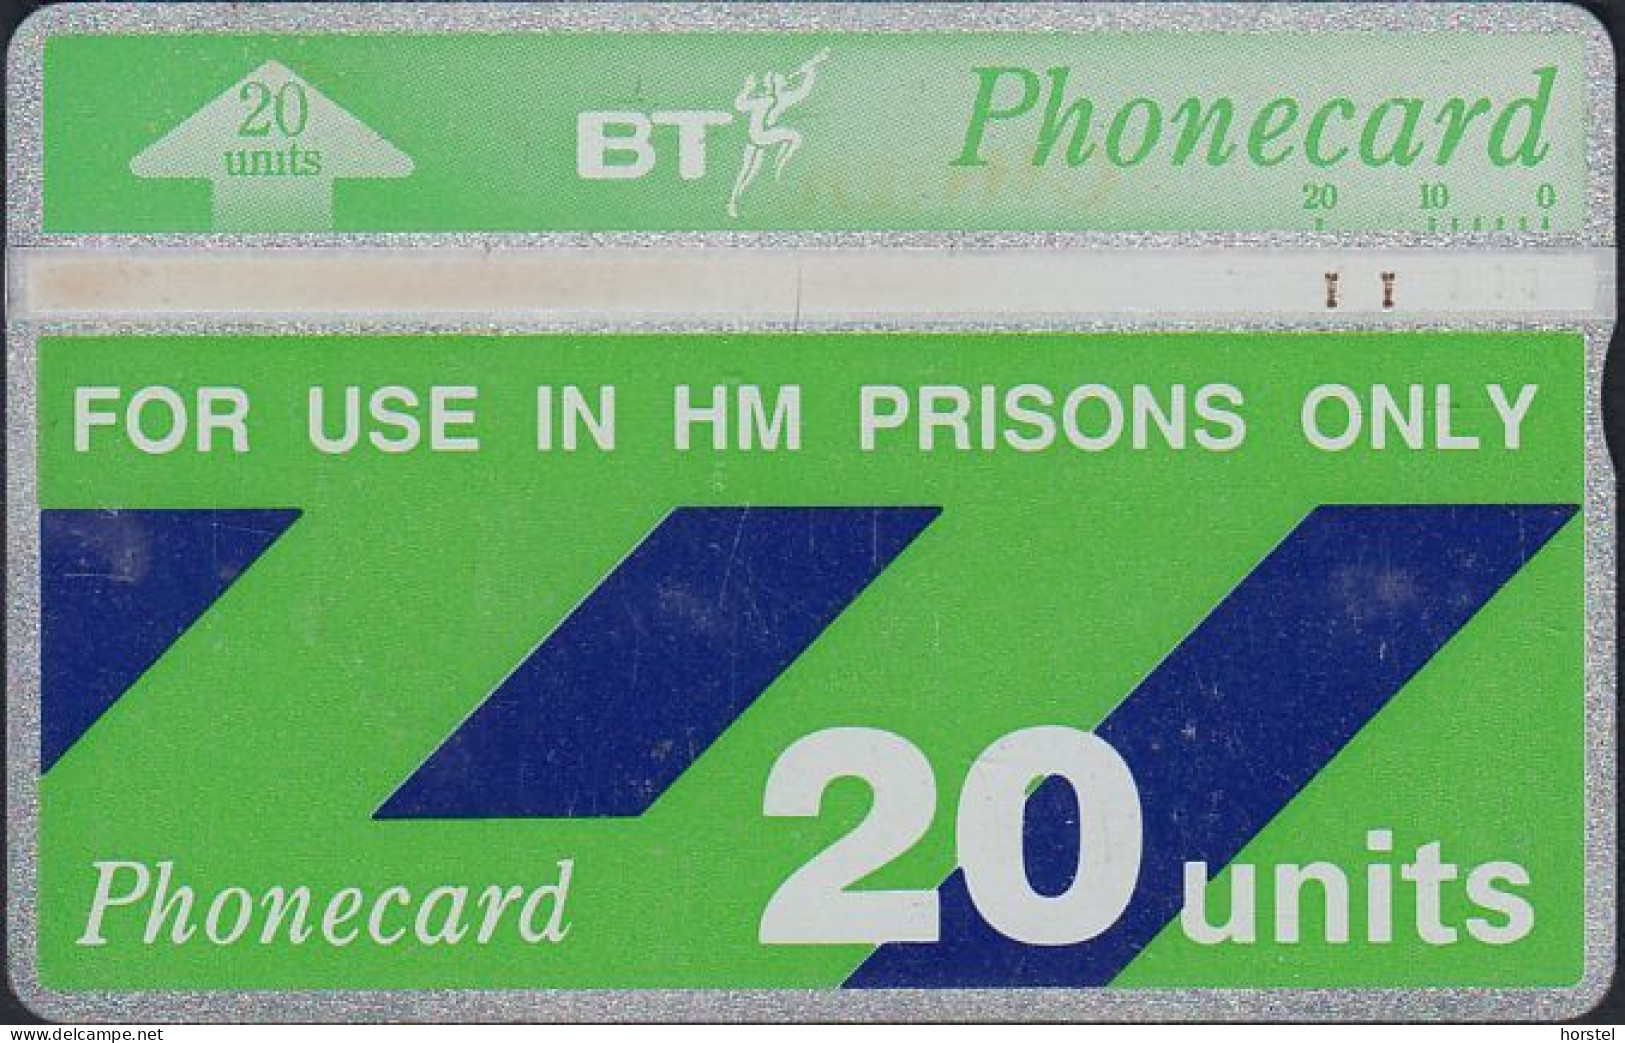 UK - British Telecom L&G H.M. Prison Card CUP005  (212E)  20 Units - Gevangenissen